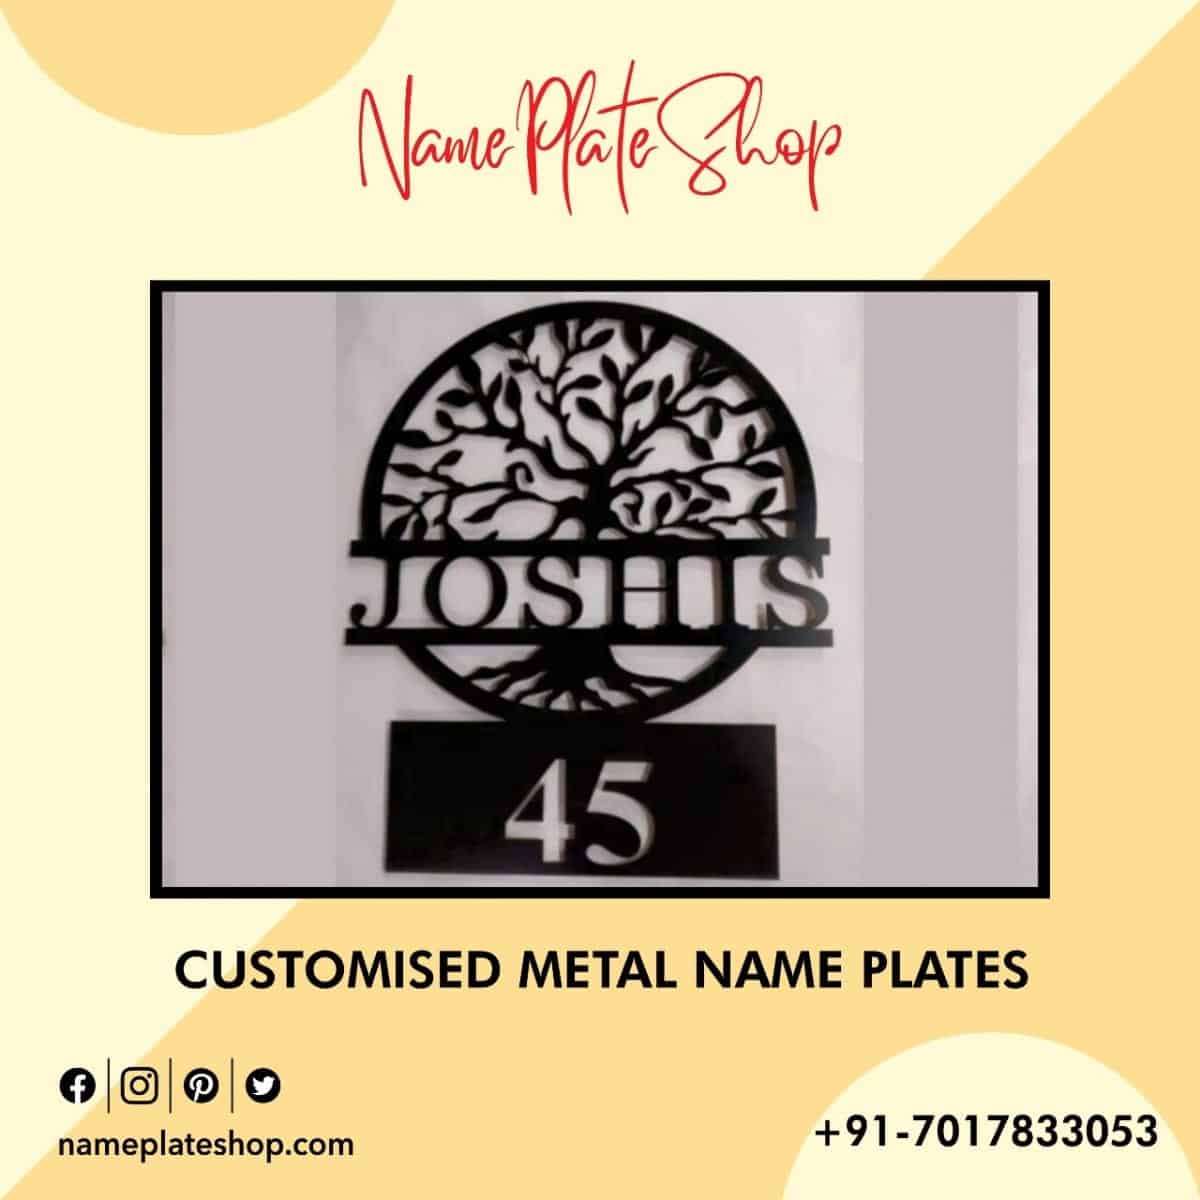 Customised Metal Name Plates